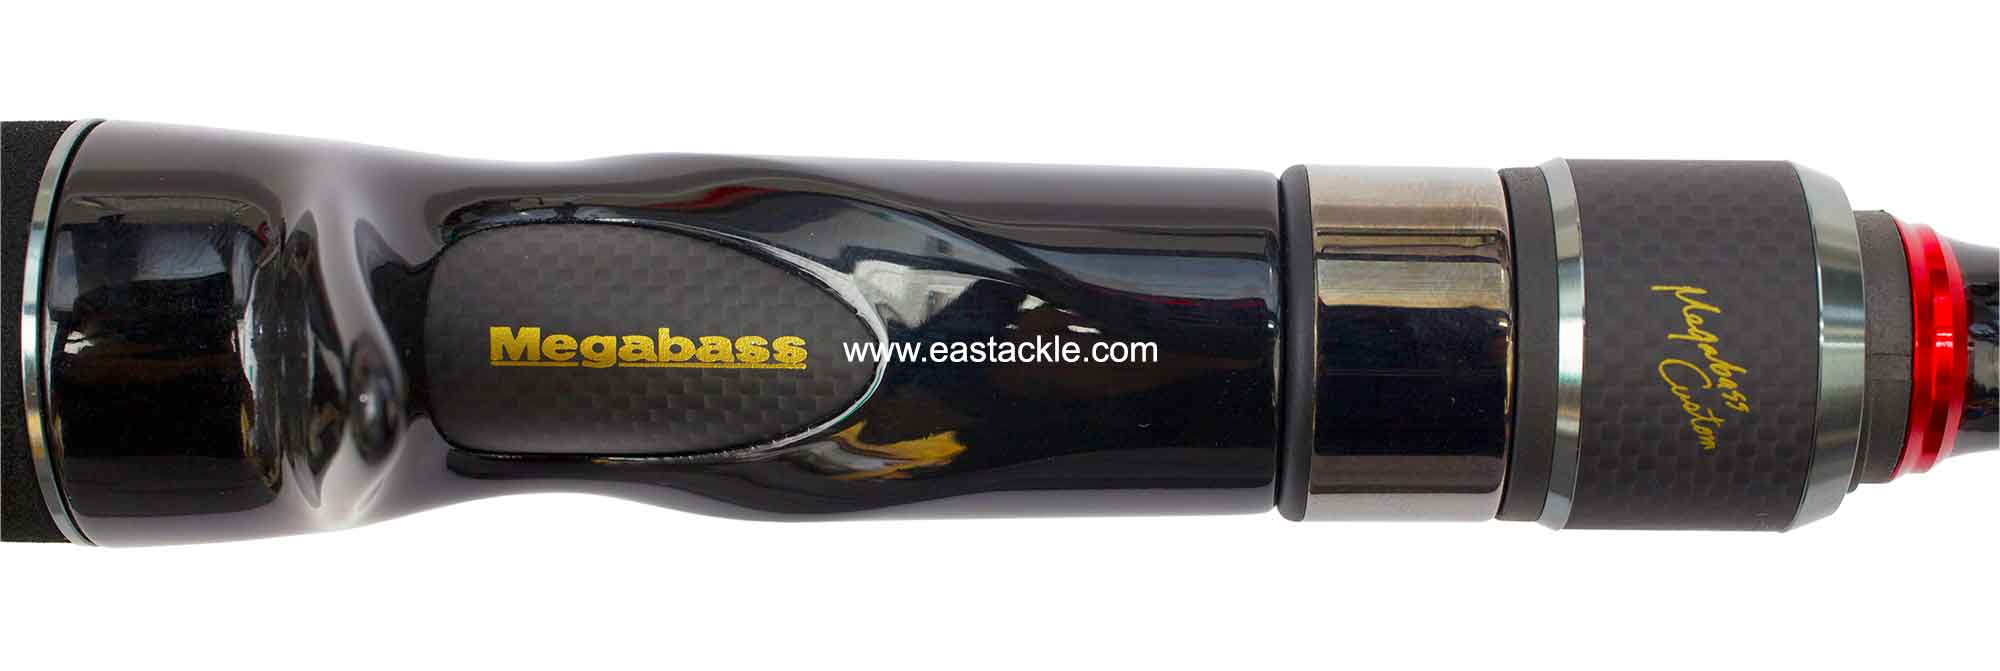 Megabass - Racing Condition World Edition - RCC-732H - Bait Casting Rod - Reel Seat (Bottom View)